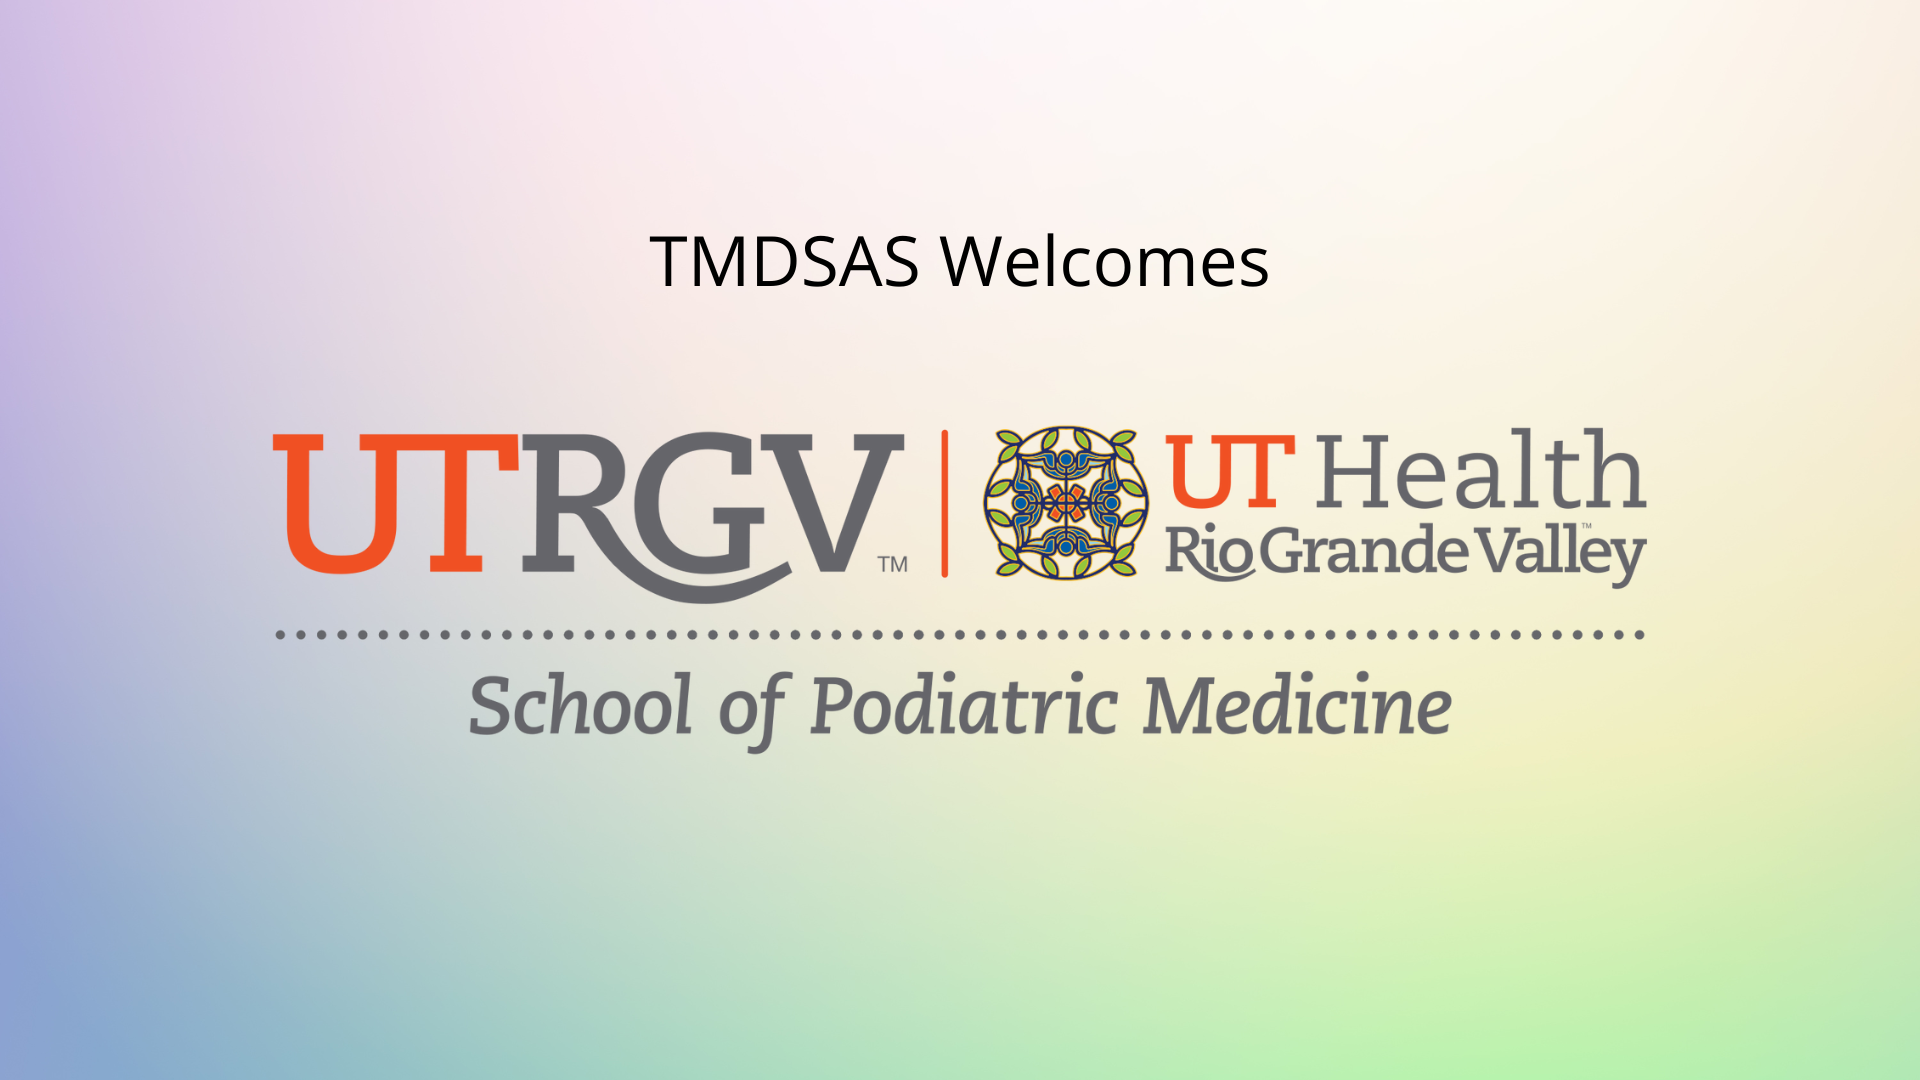 Welcome to The UTRGV School of Podiatric Medicine!